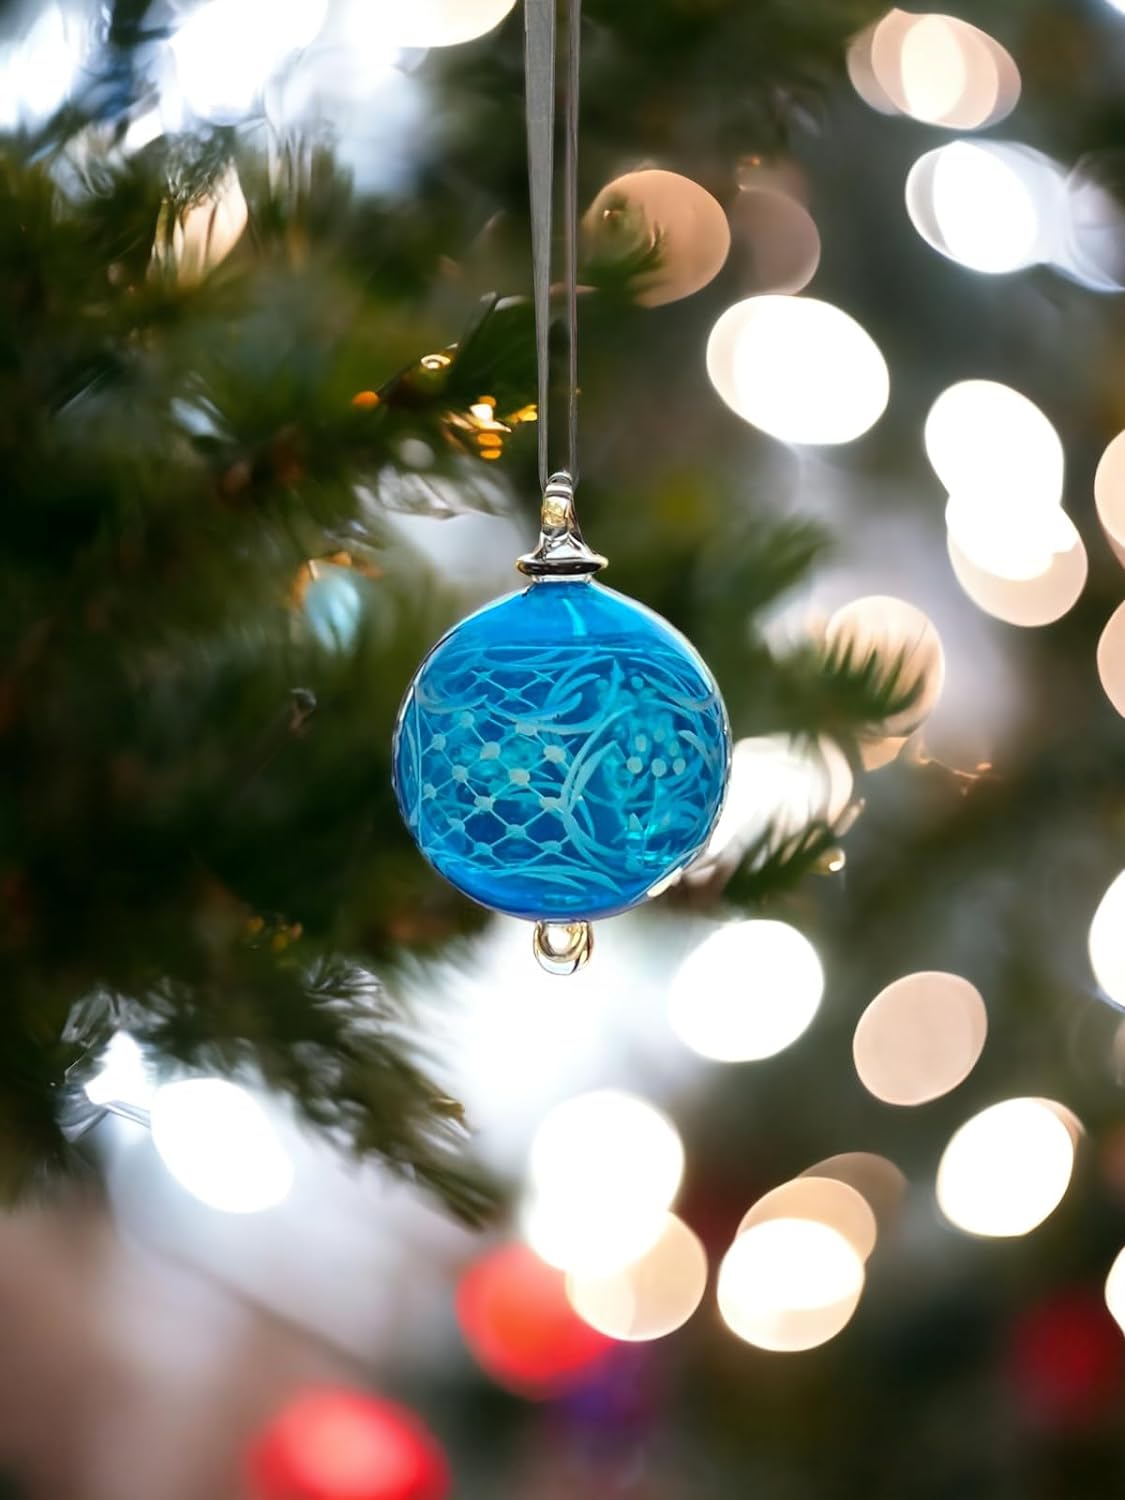 Blue Christmas Tree Ornament - Les Trois Pyramides